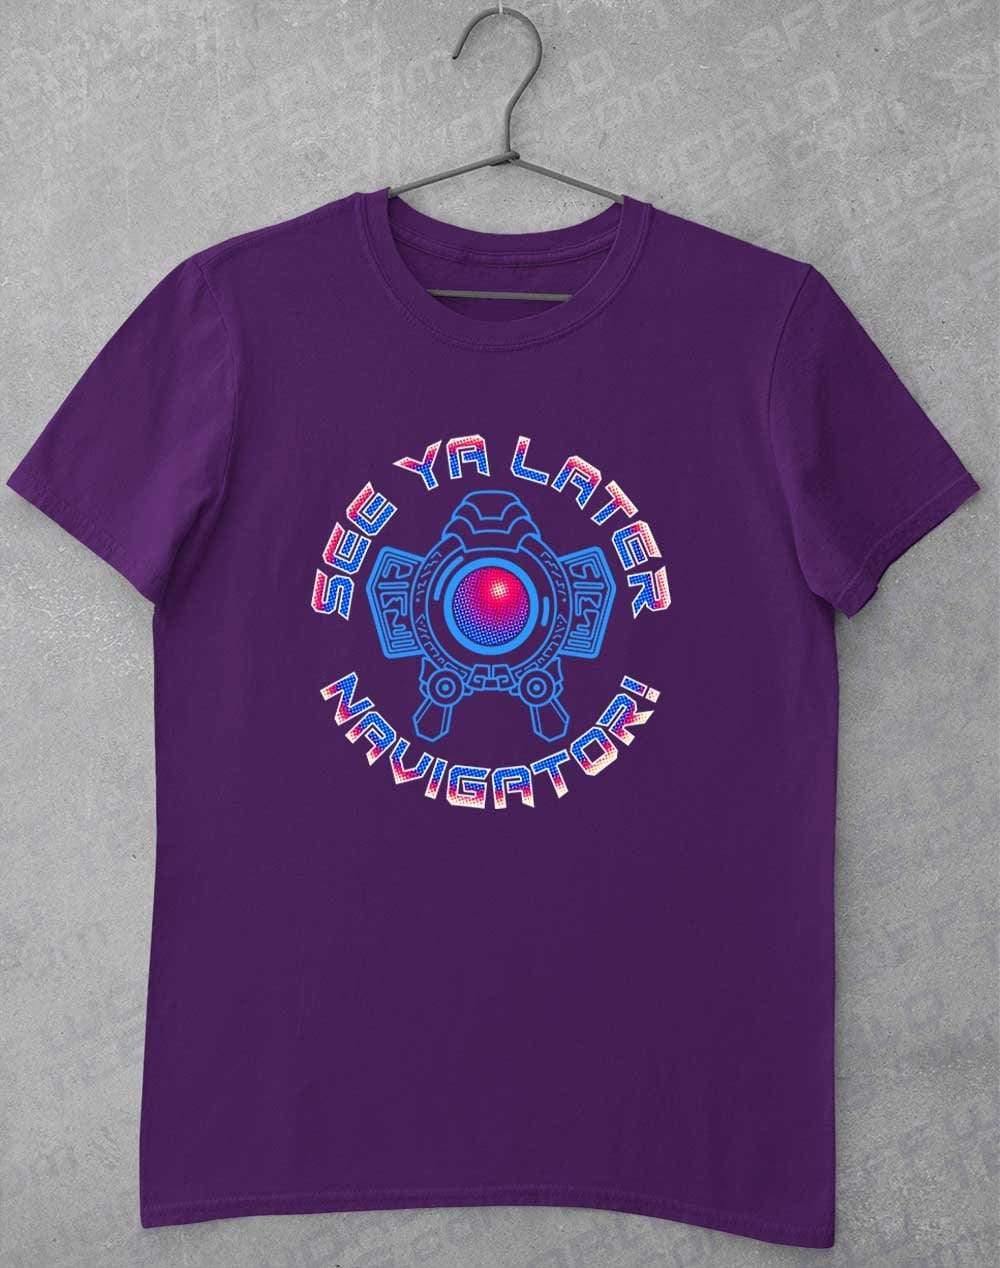 See Ya Later Navigator - T-Shirt S / Purple  - Off World Tees